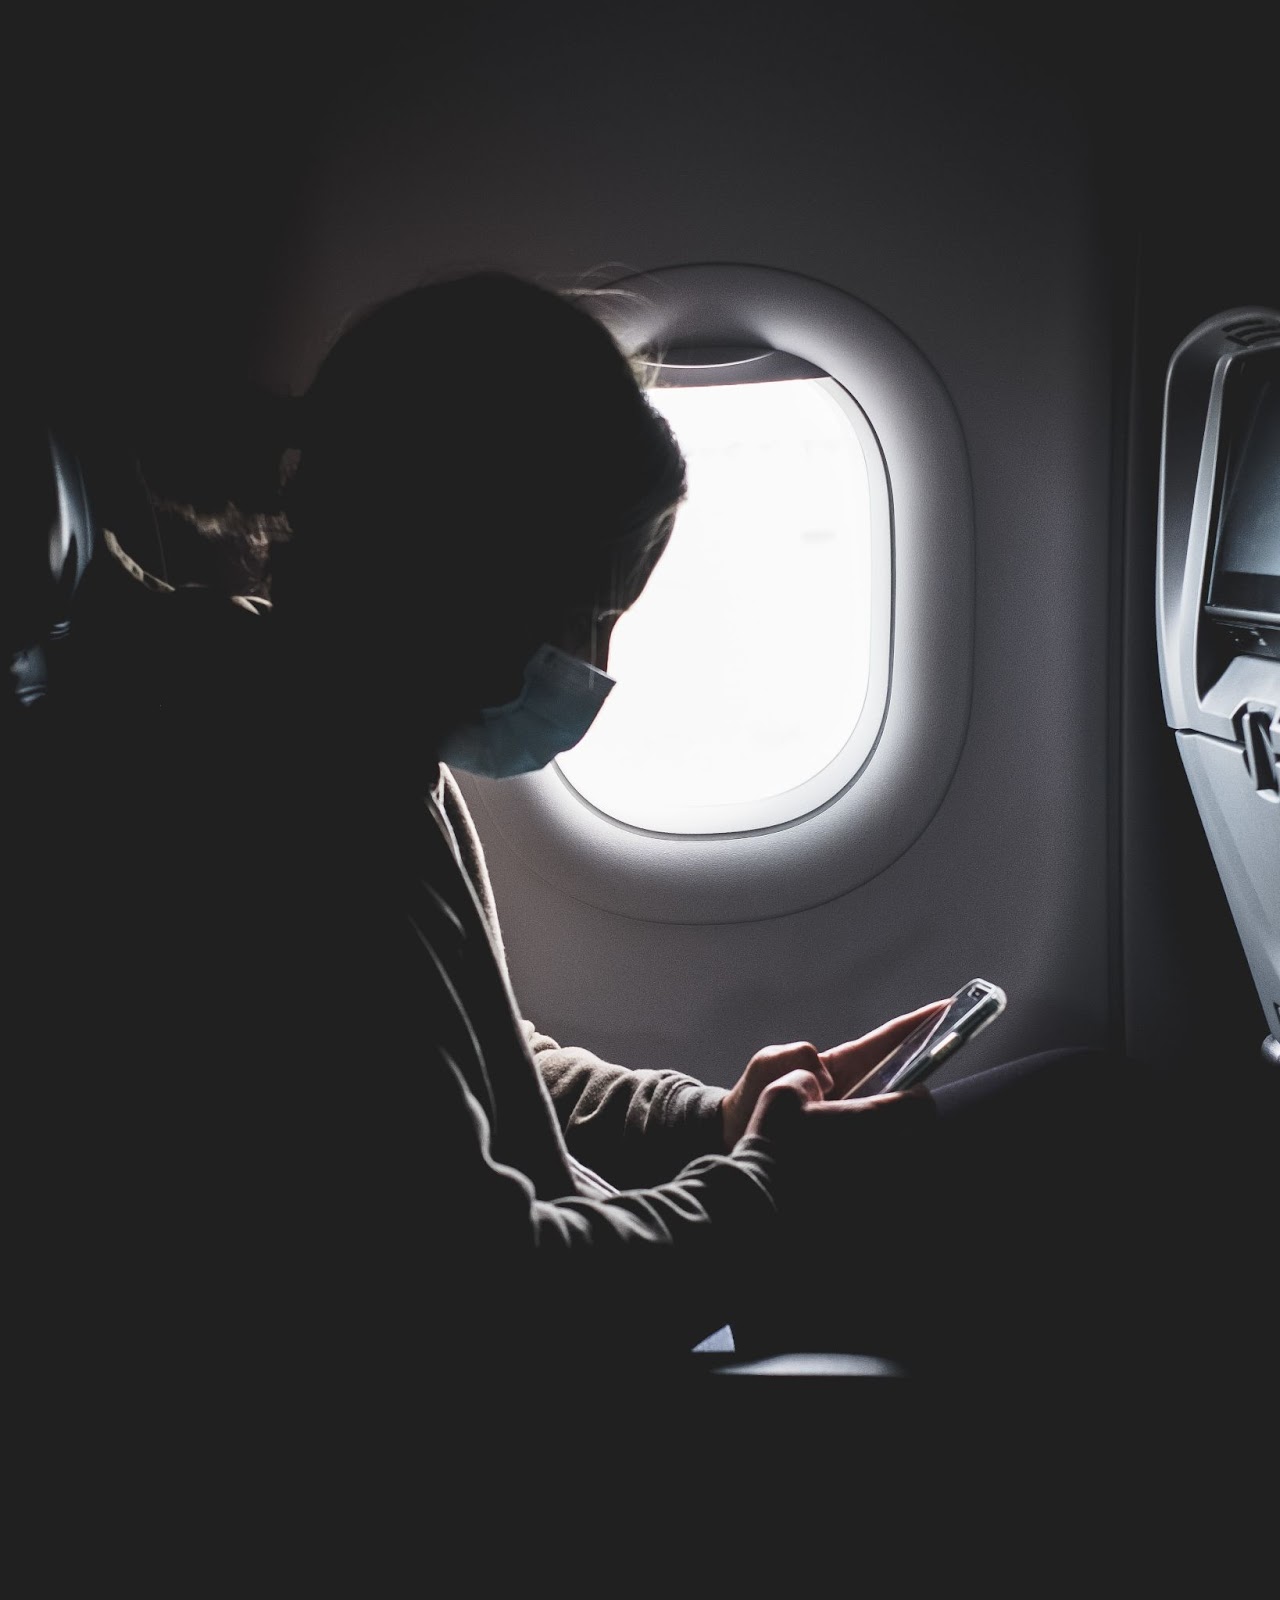 Masked traveler checking phone on a plane